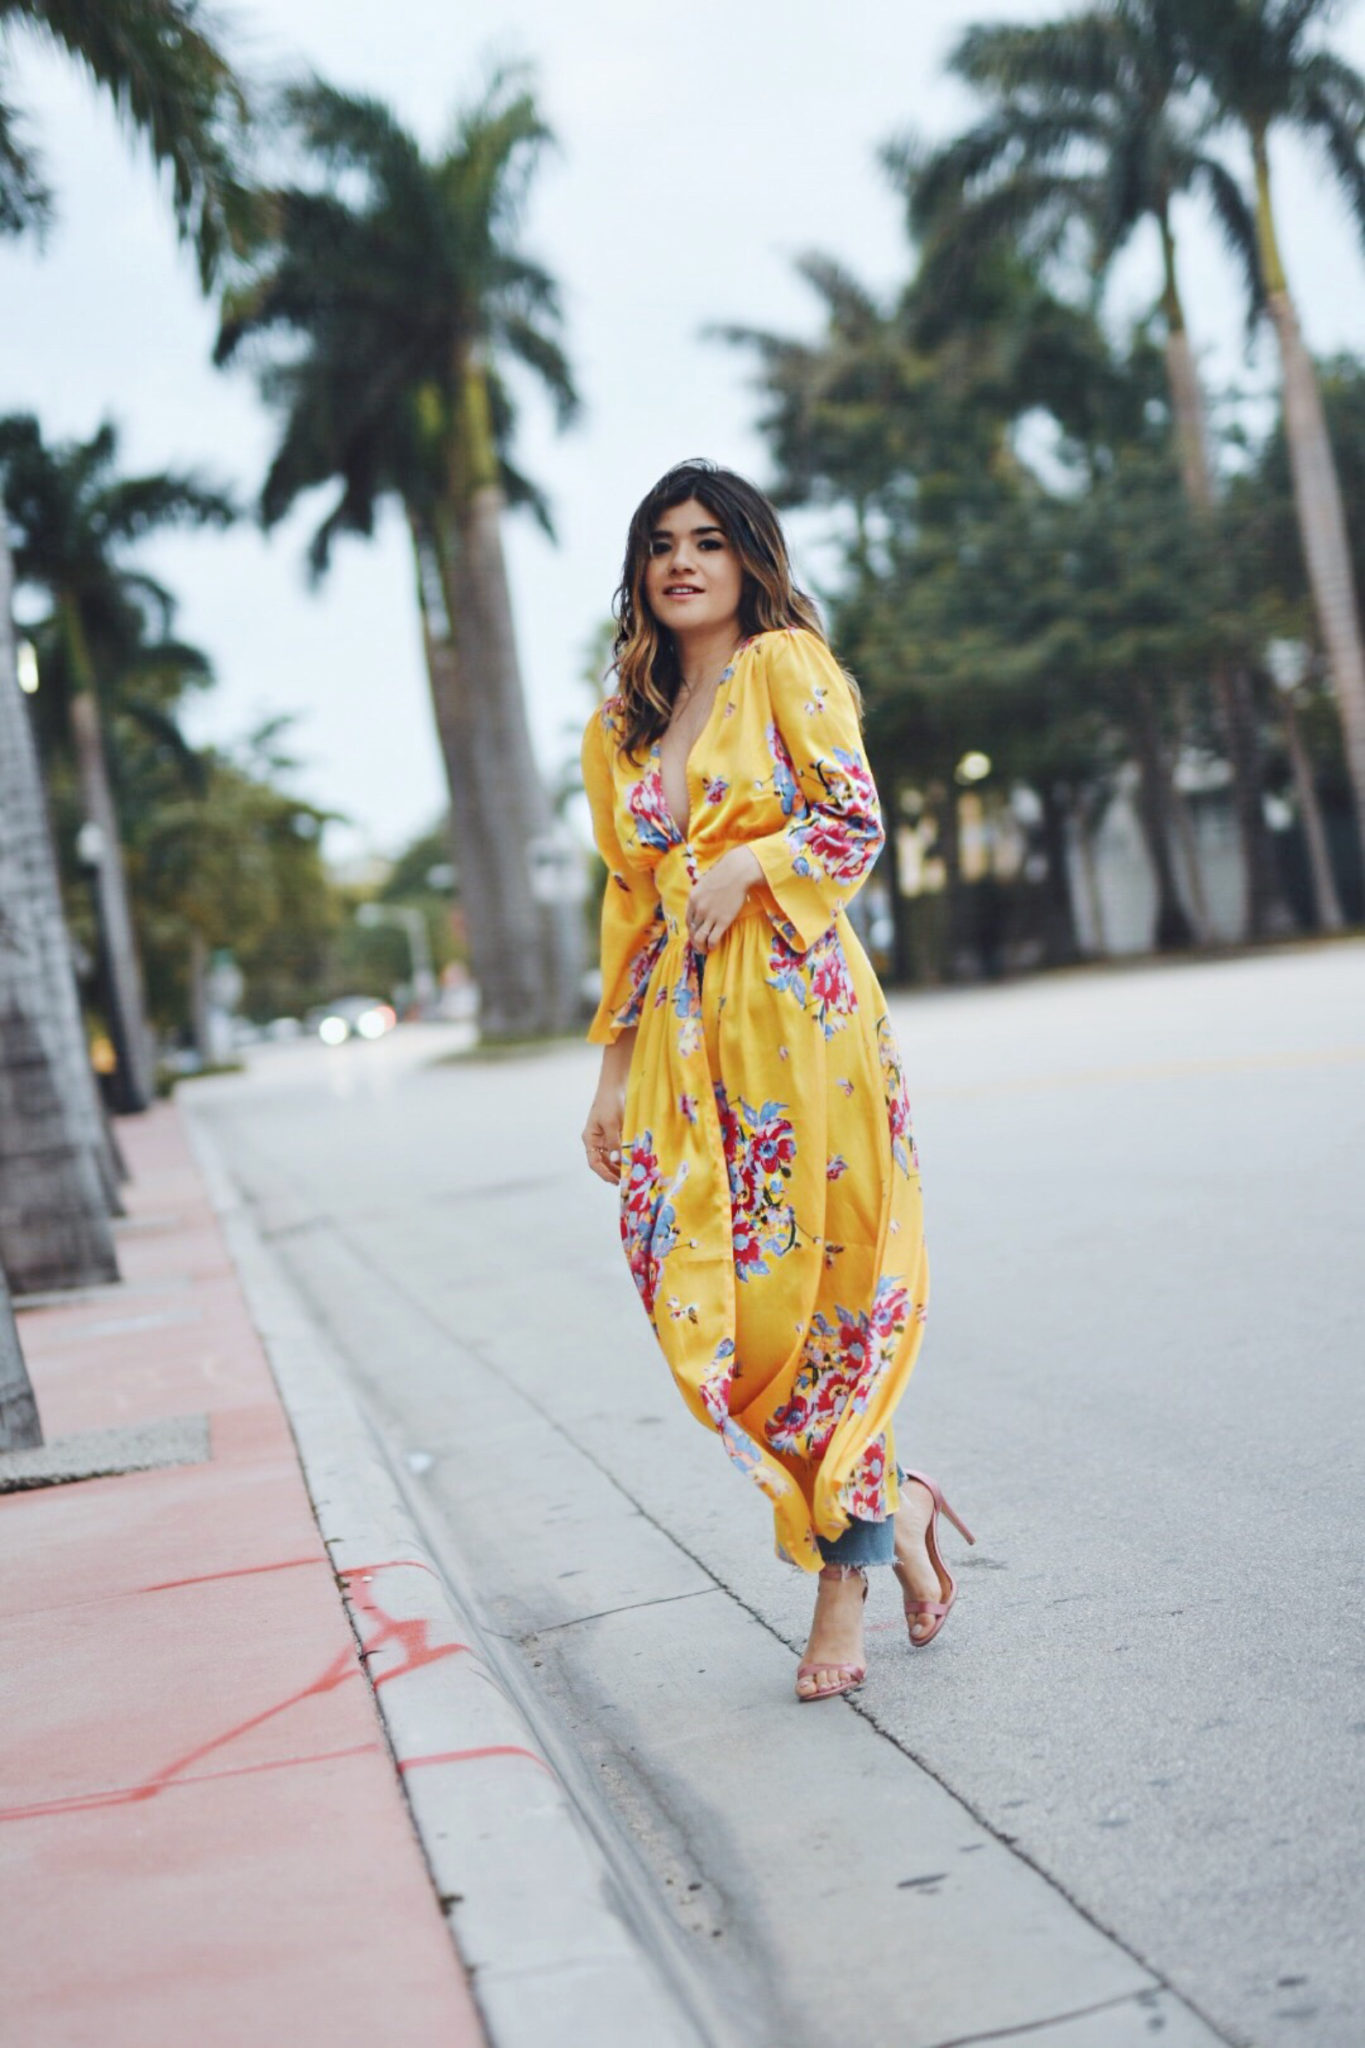 Miami weekend getaway 2018 by popular Denver blogger Chic Talk